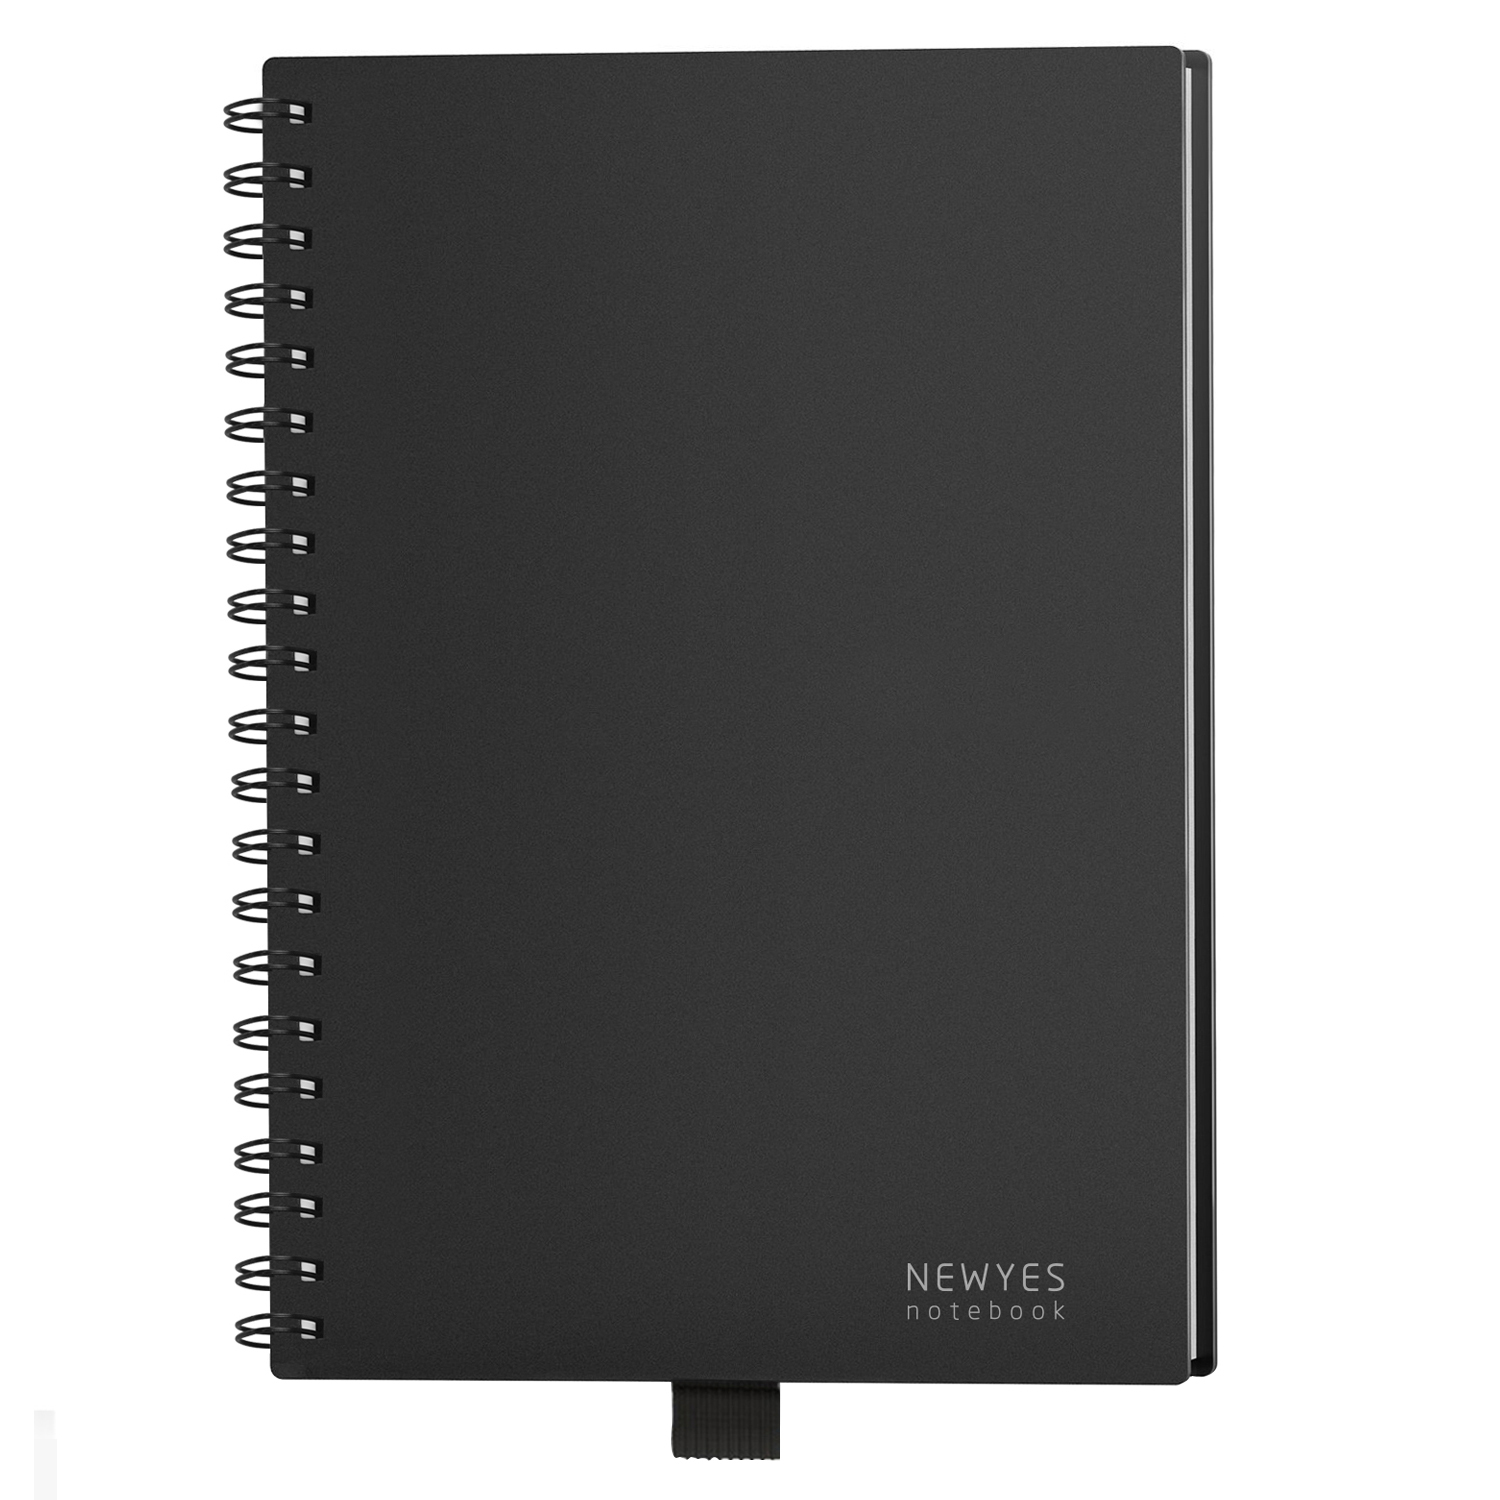 smart notebook express 3.0 download